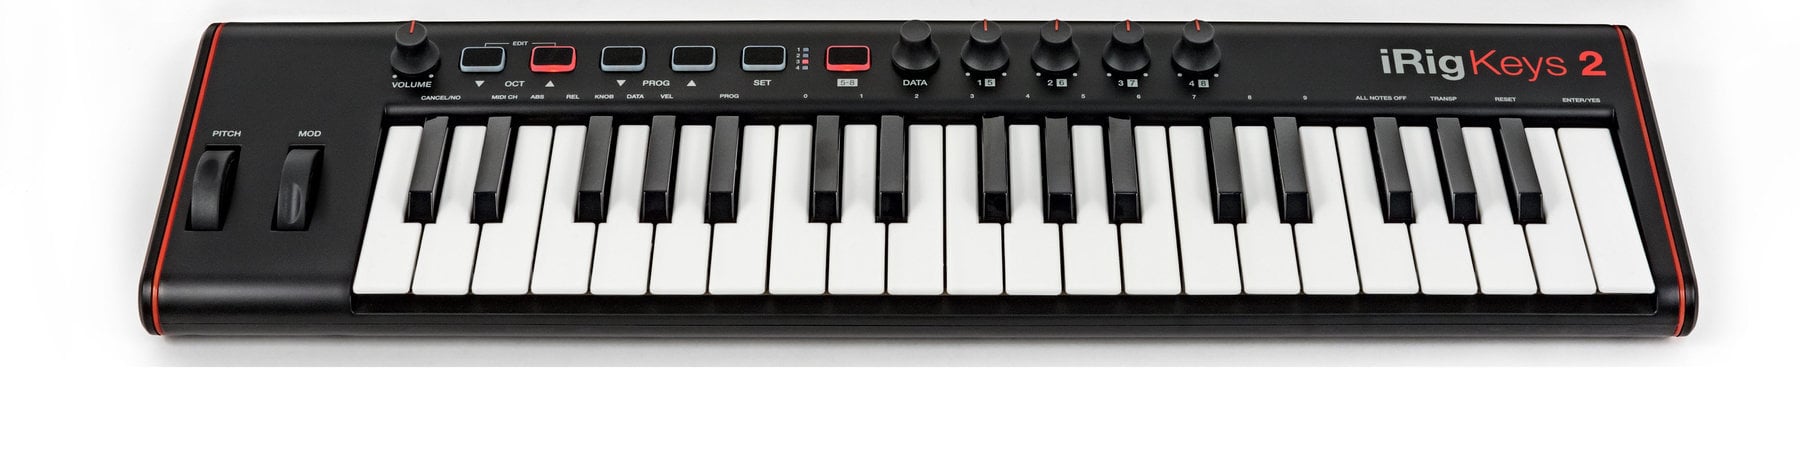 MIDI-Keyboard IK Multimedia iRig Keys 2